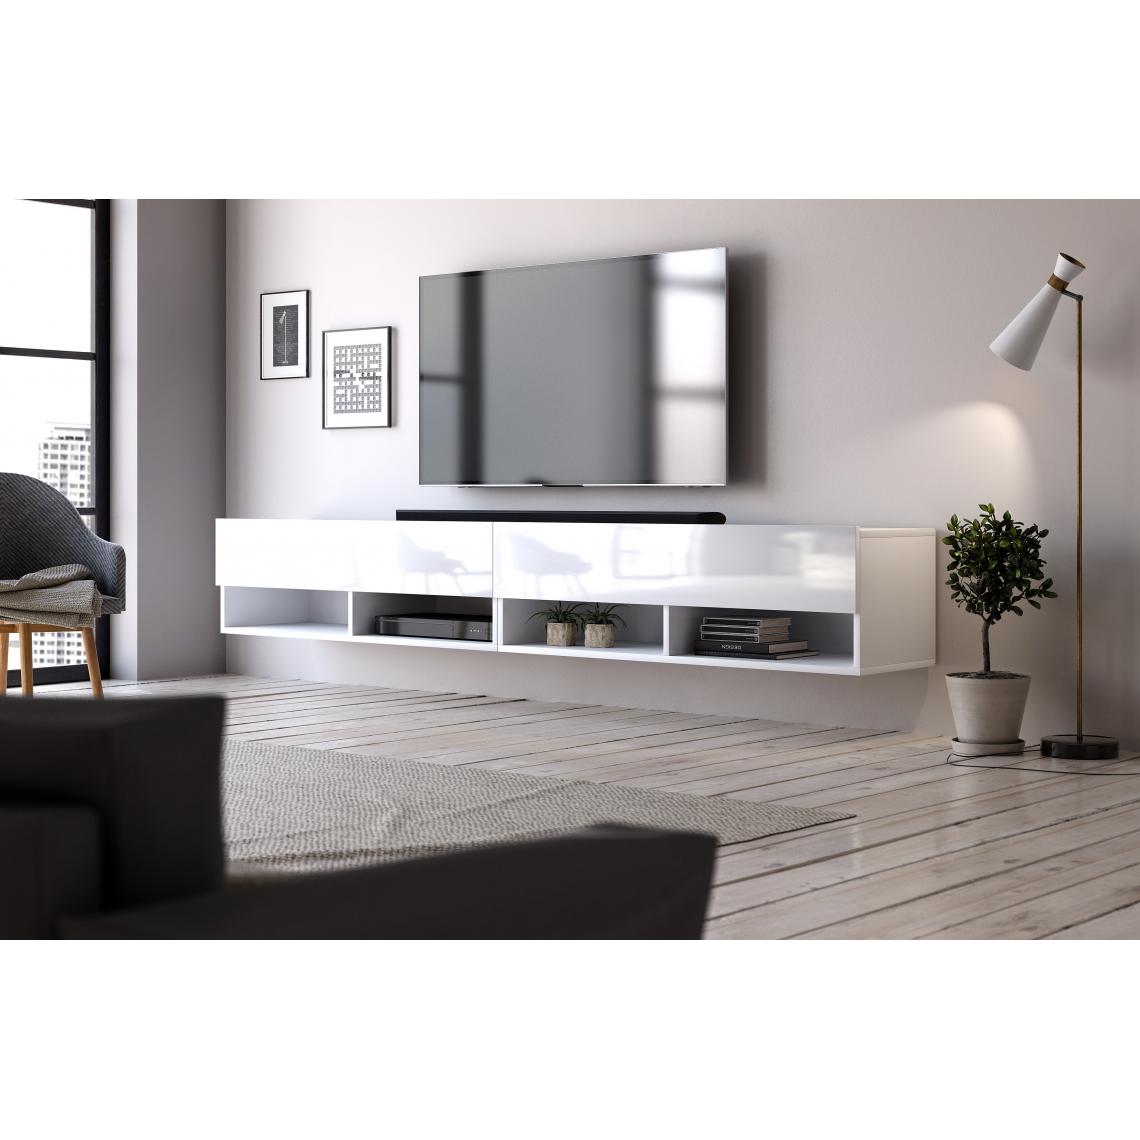 Vivaldi - VIVALDI Meuble TV - DERBY DOUBLE - 200 cm - blanc mat - blanc brillant - style moderne - Meubles TV, Hi-Fi